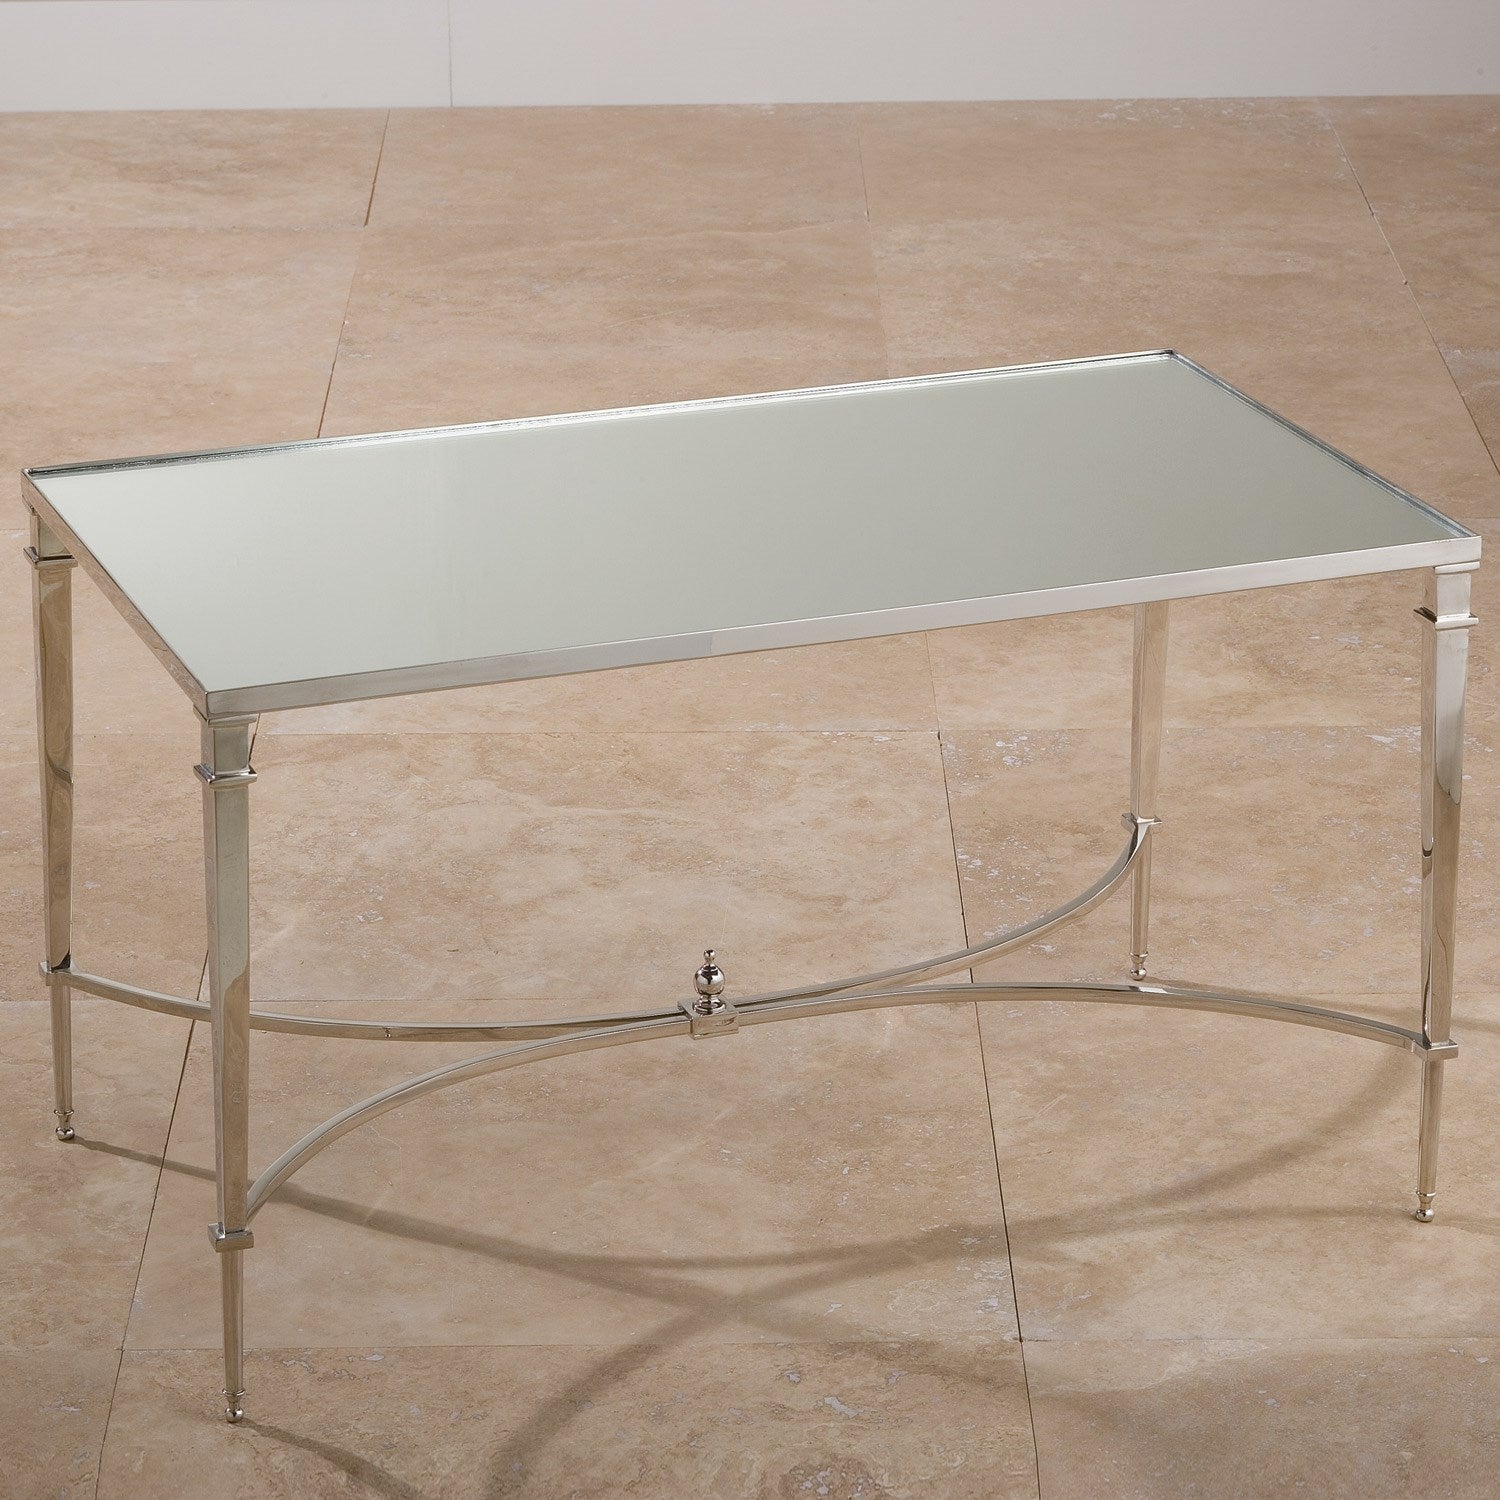 French Square Leg Cocktail Table - Nickel w/ Mirror - Grats Decor Interior Design & Build Inc.